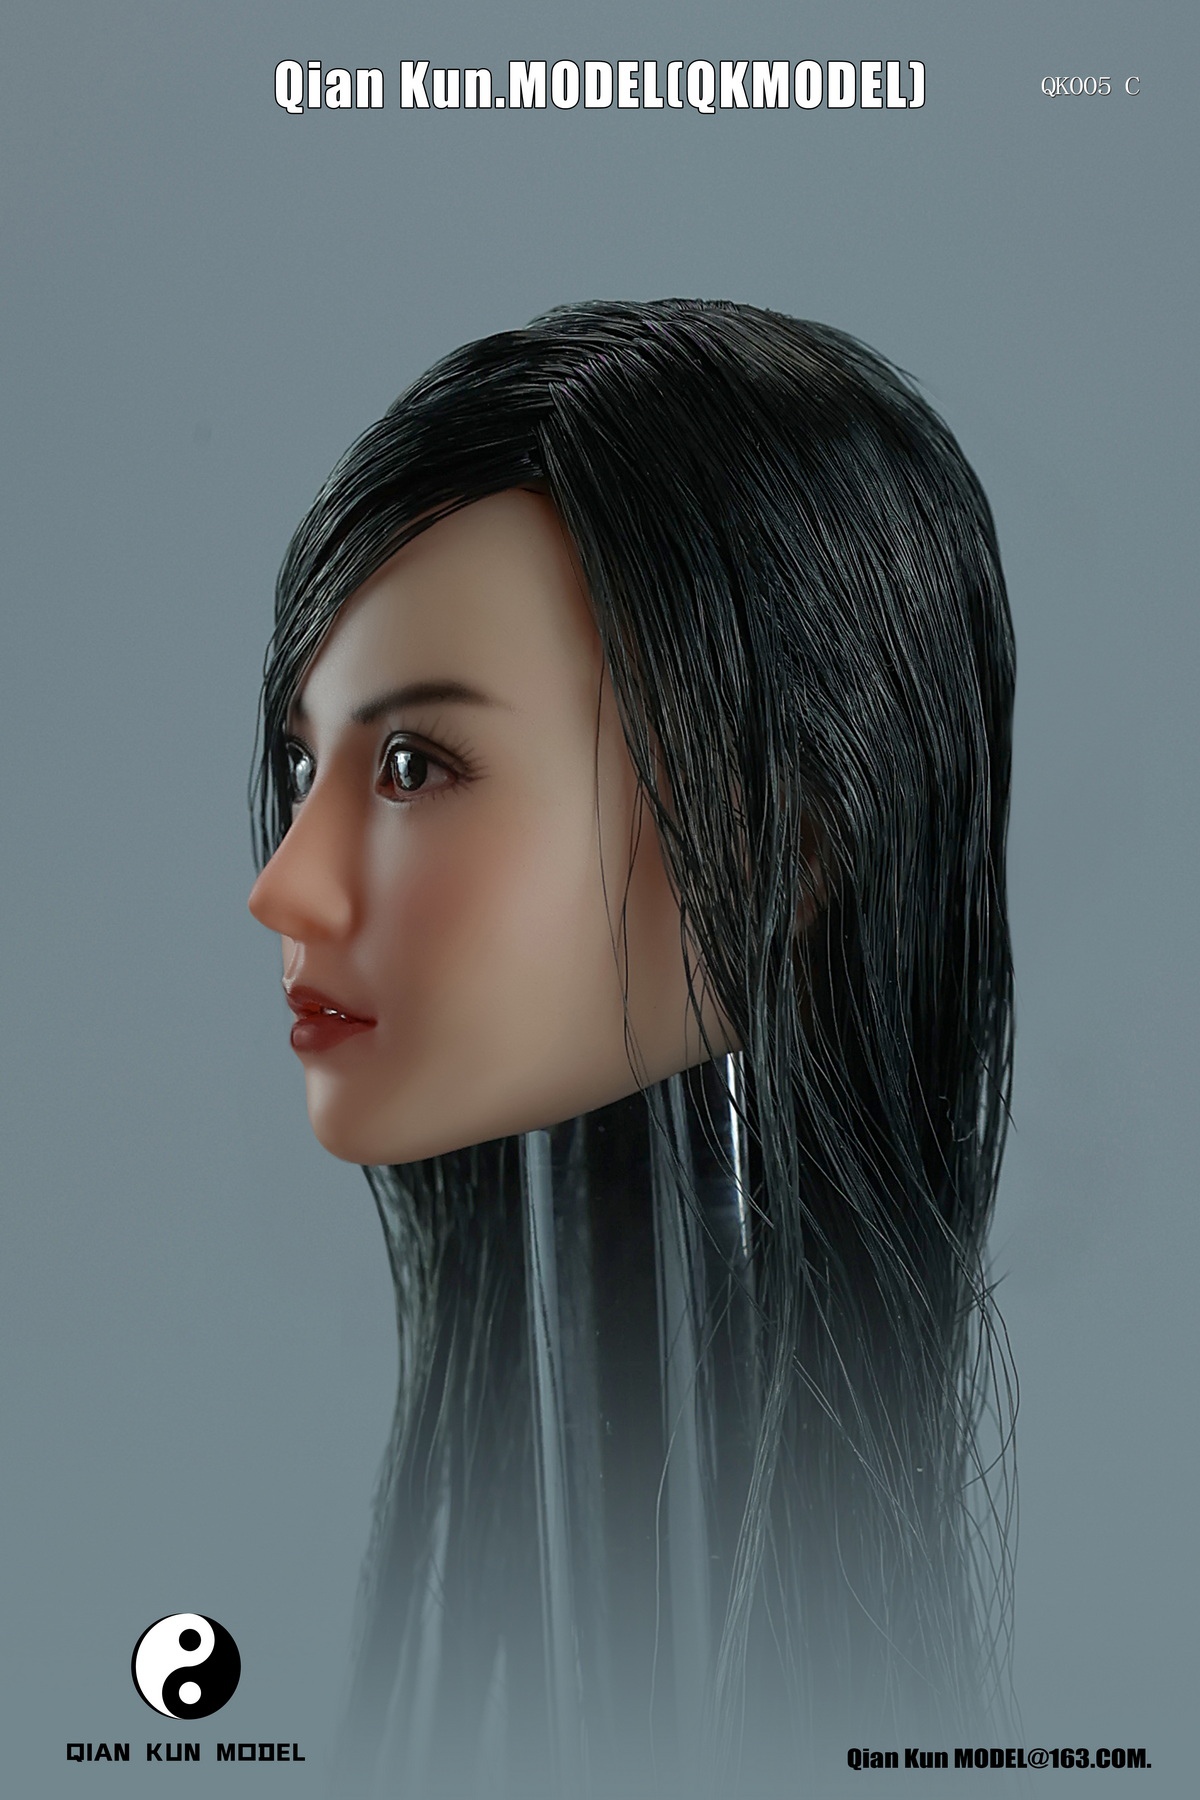 Female - NEW PRODUCT: Qian Kun.Model - Sweet Asian Female Head Sculpture (QK005-A/B/C) 14156